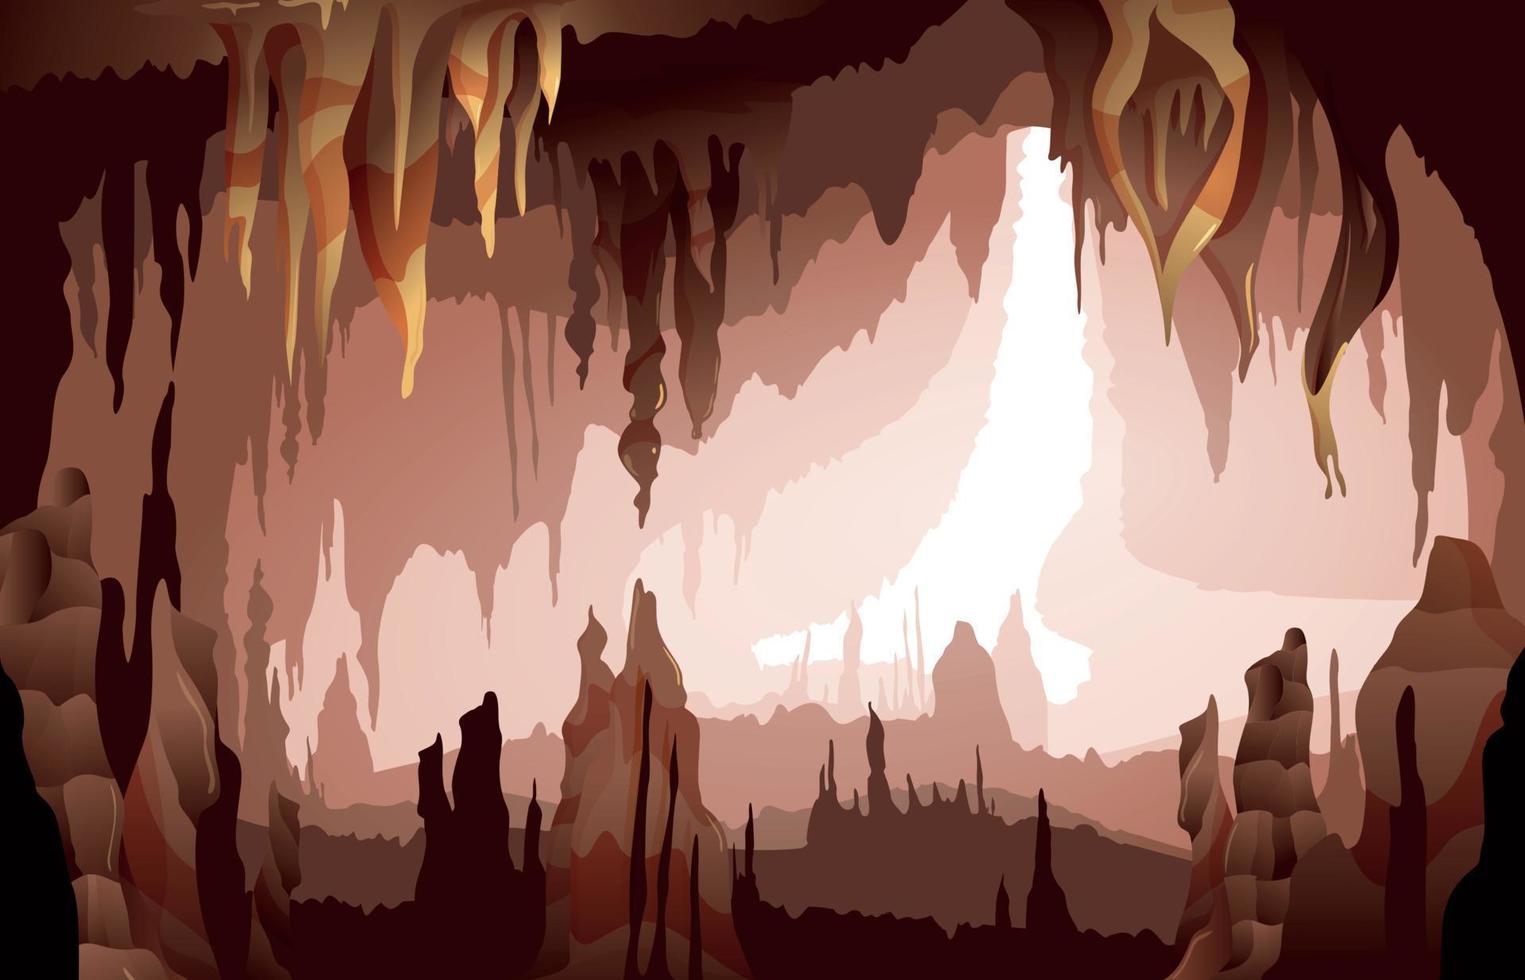 Stalactites Stalagmites Cave Interior View vector